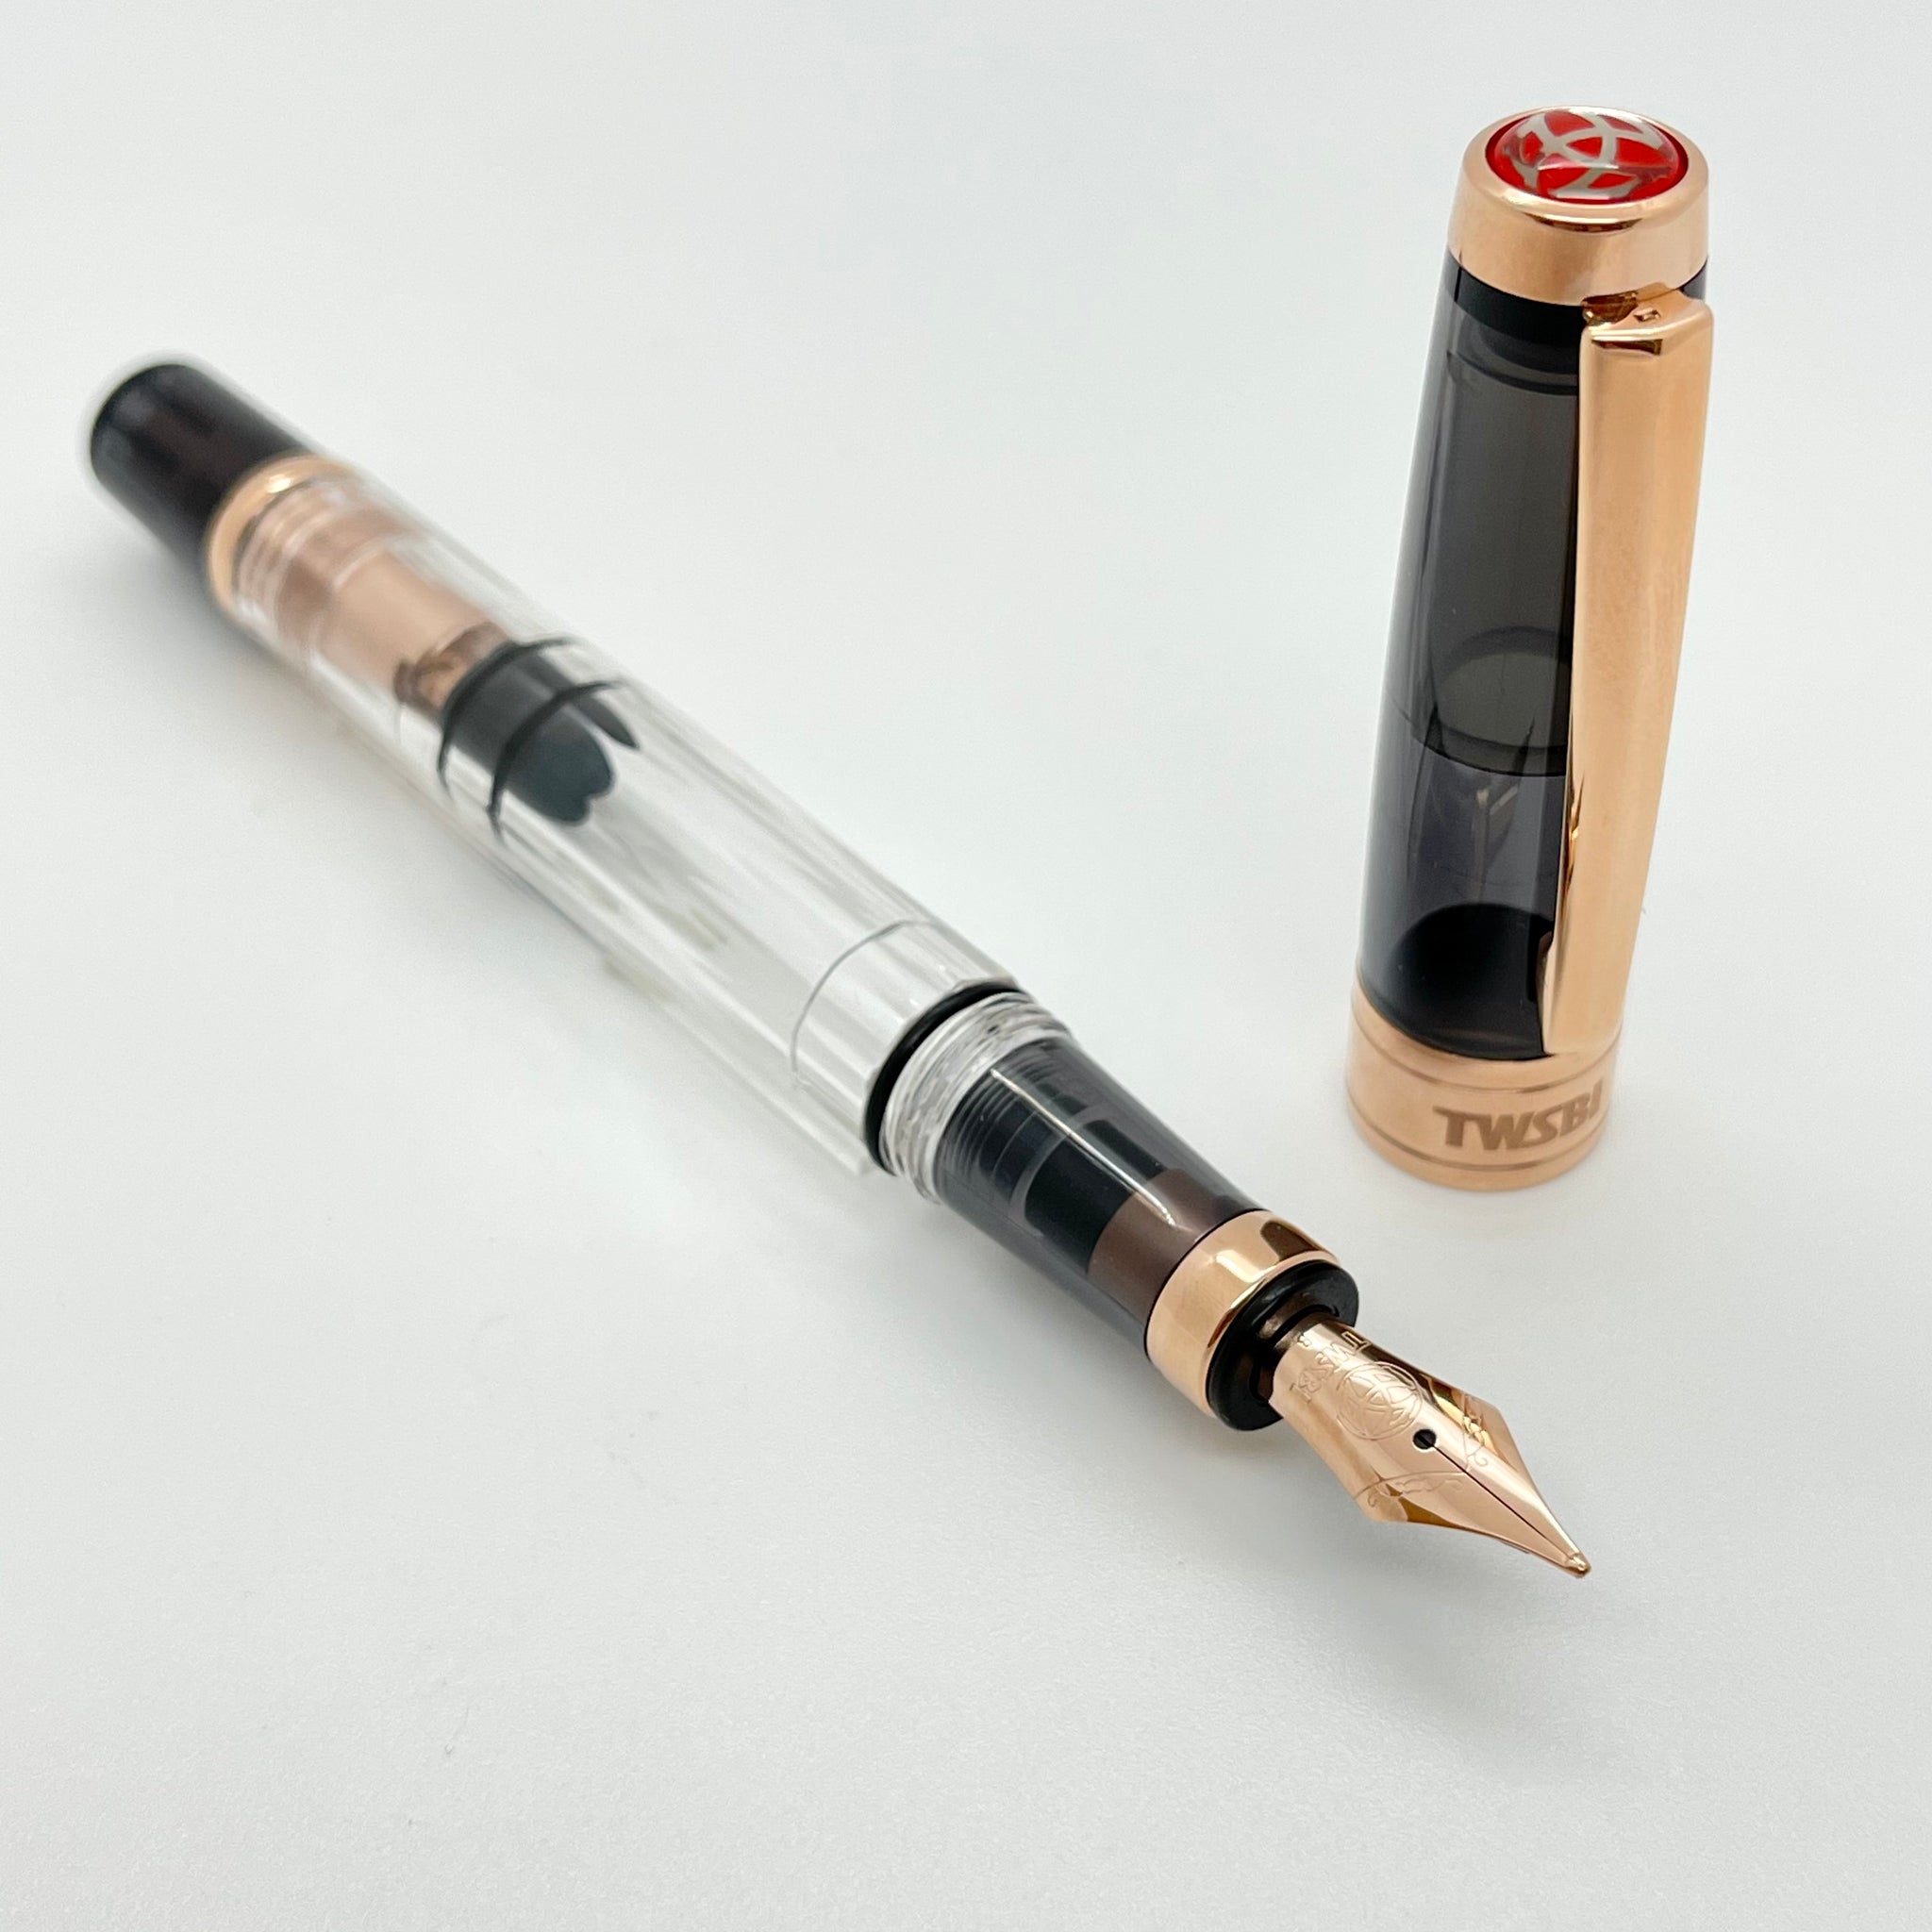 TWSBI Diamond 580 Smoke and Rose Gold Fountain Pen: A Review — The